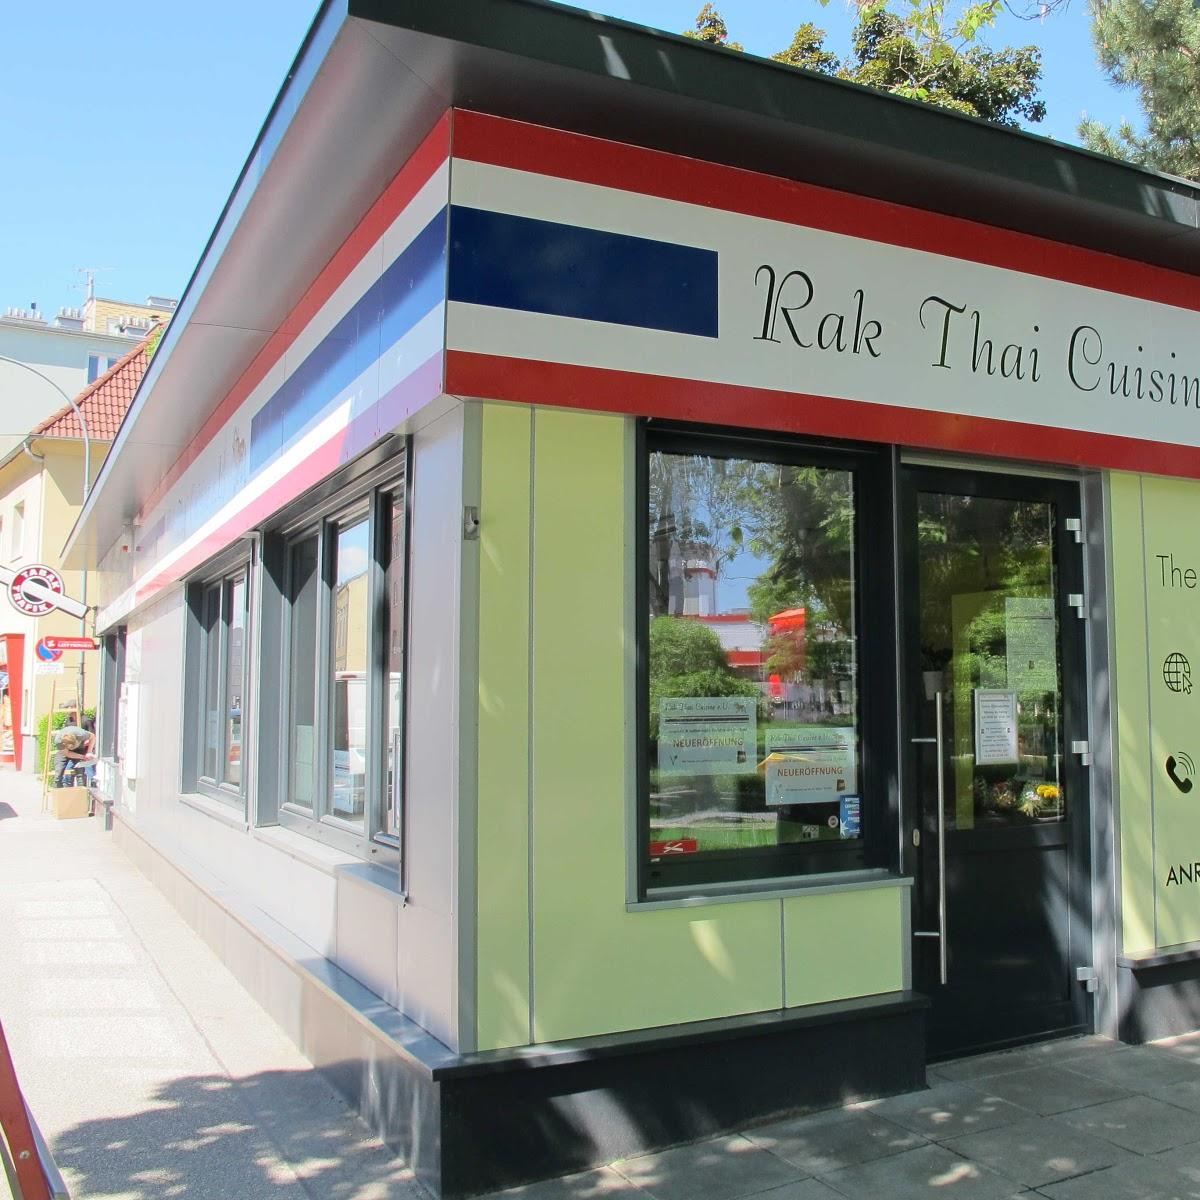 Restaurant "Rak Thai" in Wiener Neustadt